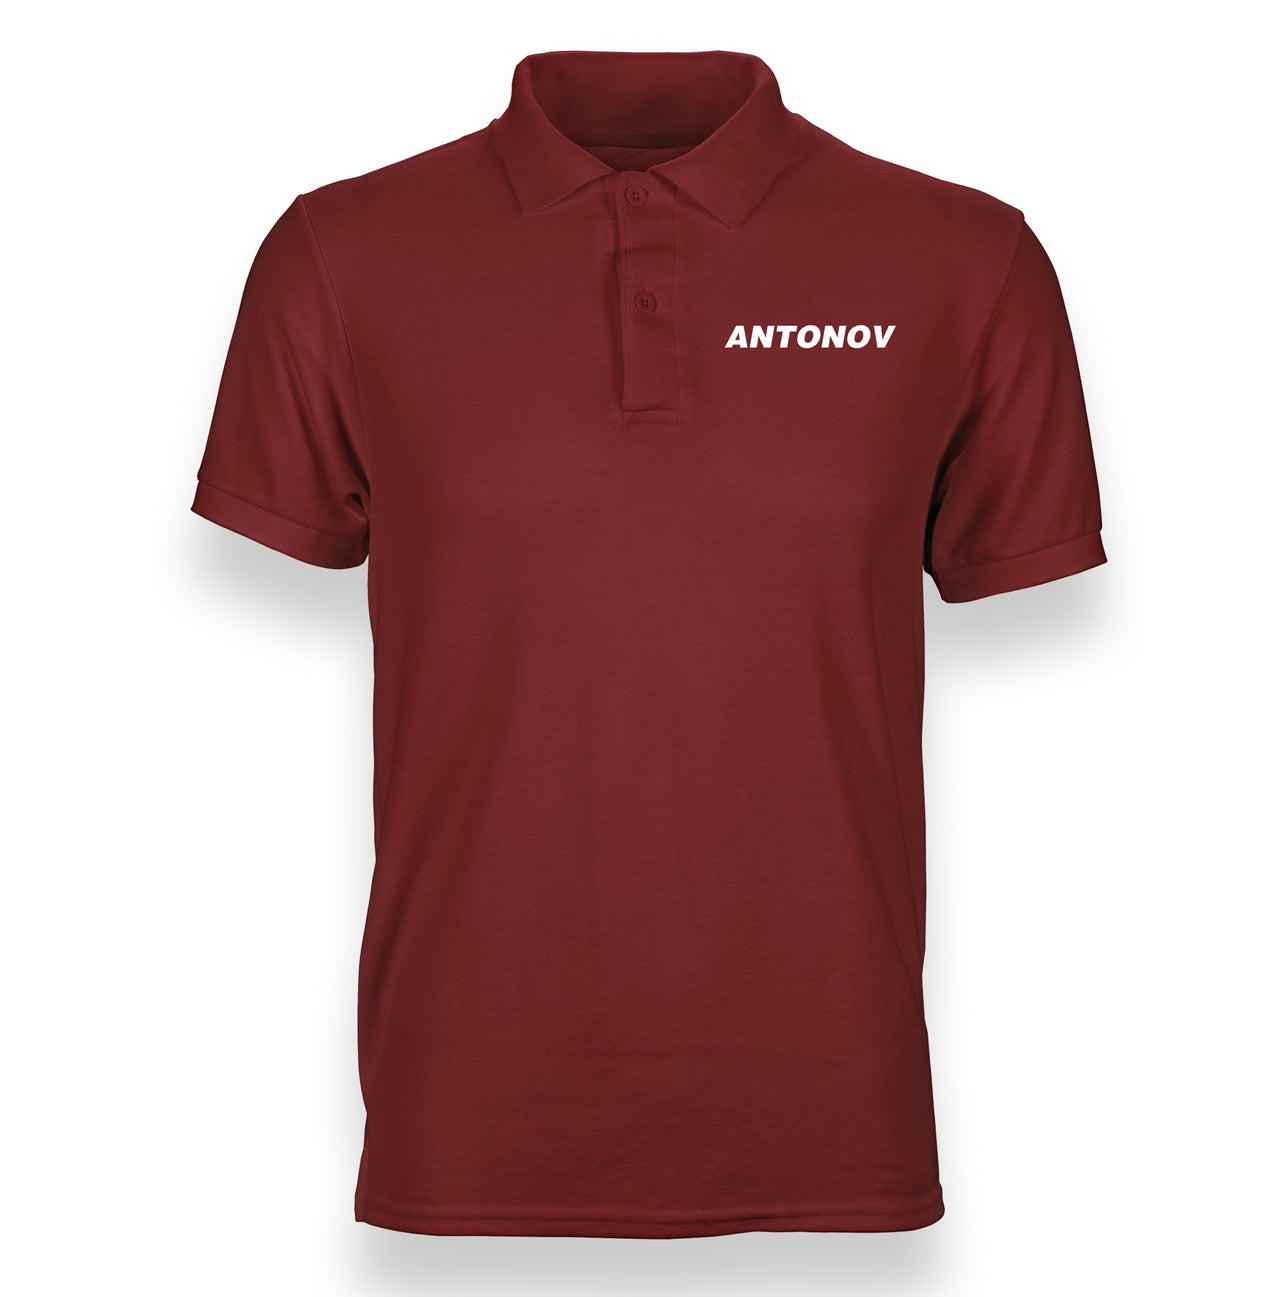 Antonov & Text Designed Polo T-Shirts